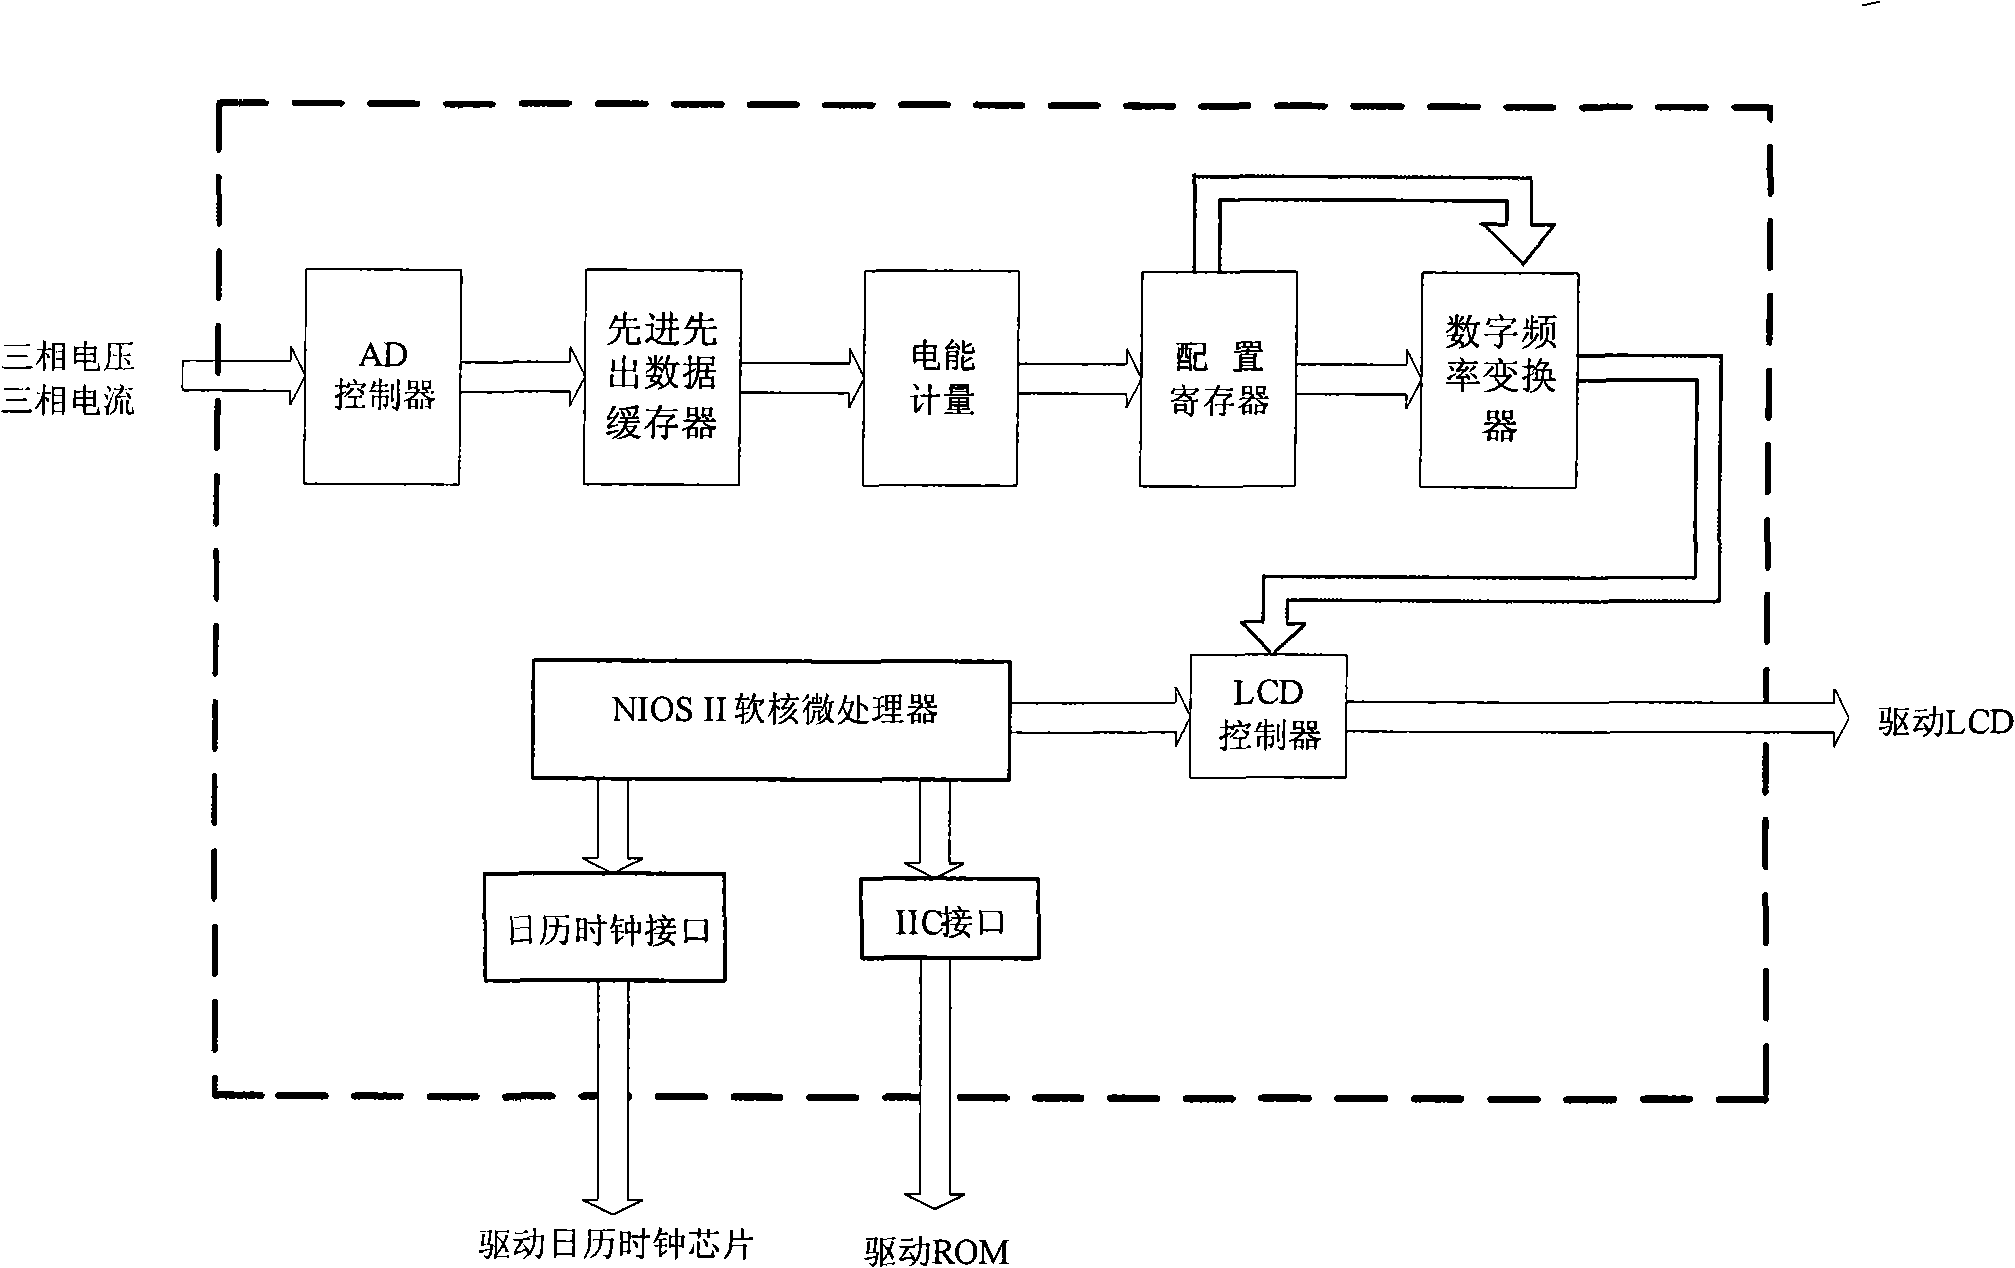 Three-phase electrical energy computation chip based on NIOS II microprocessor